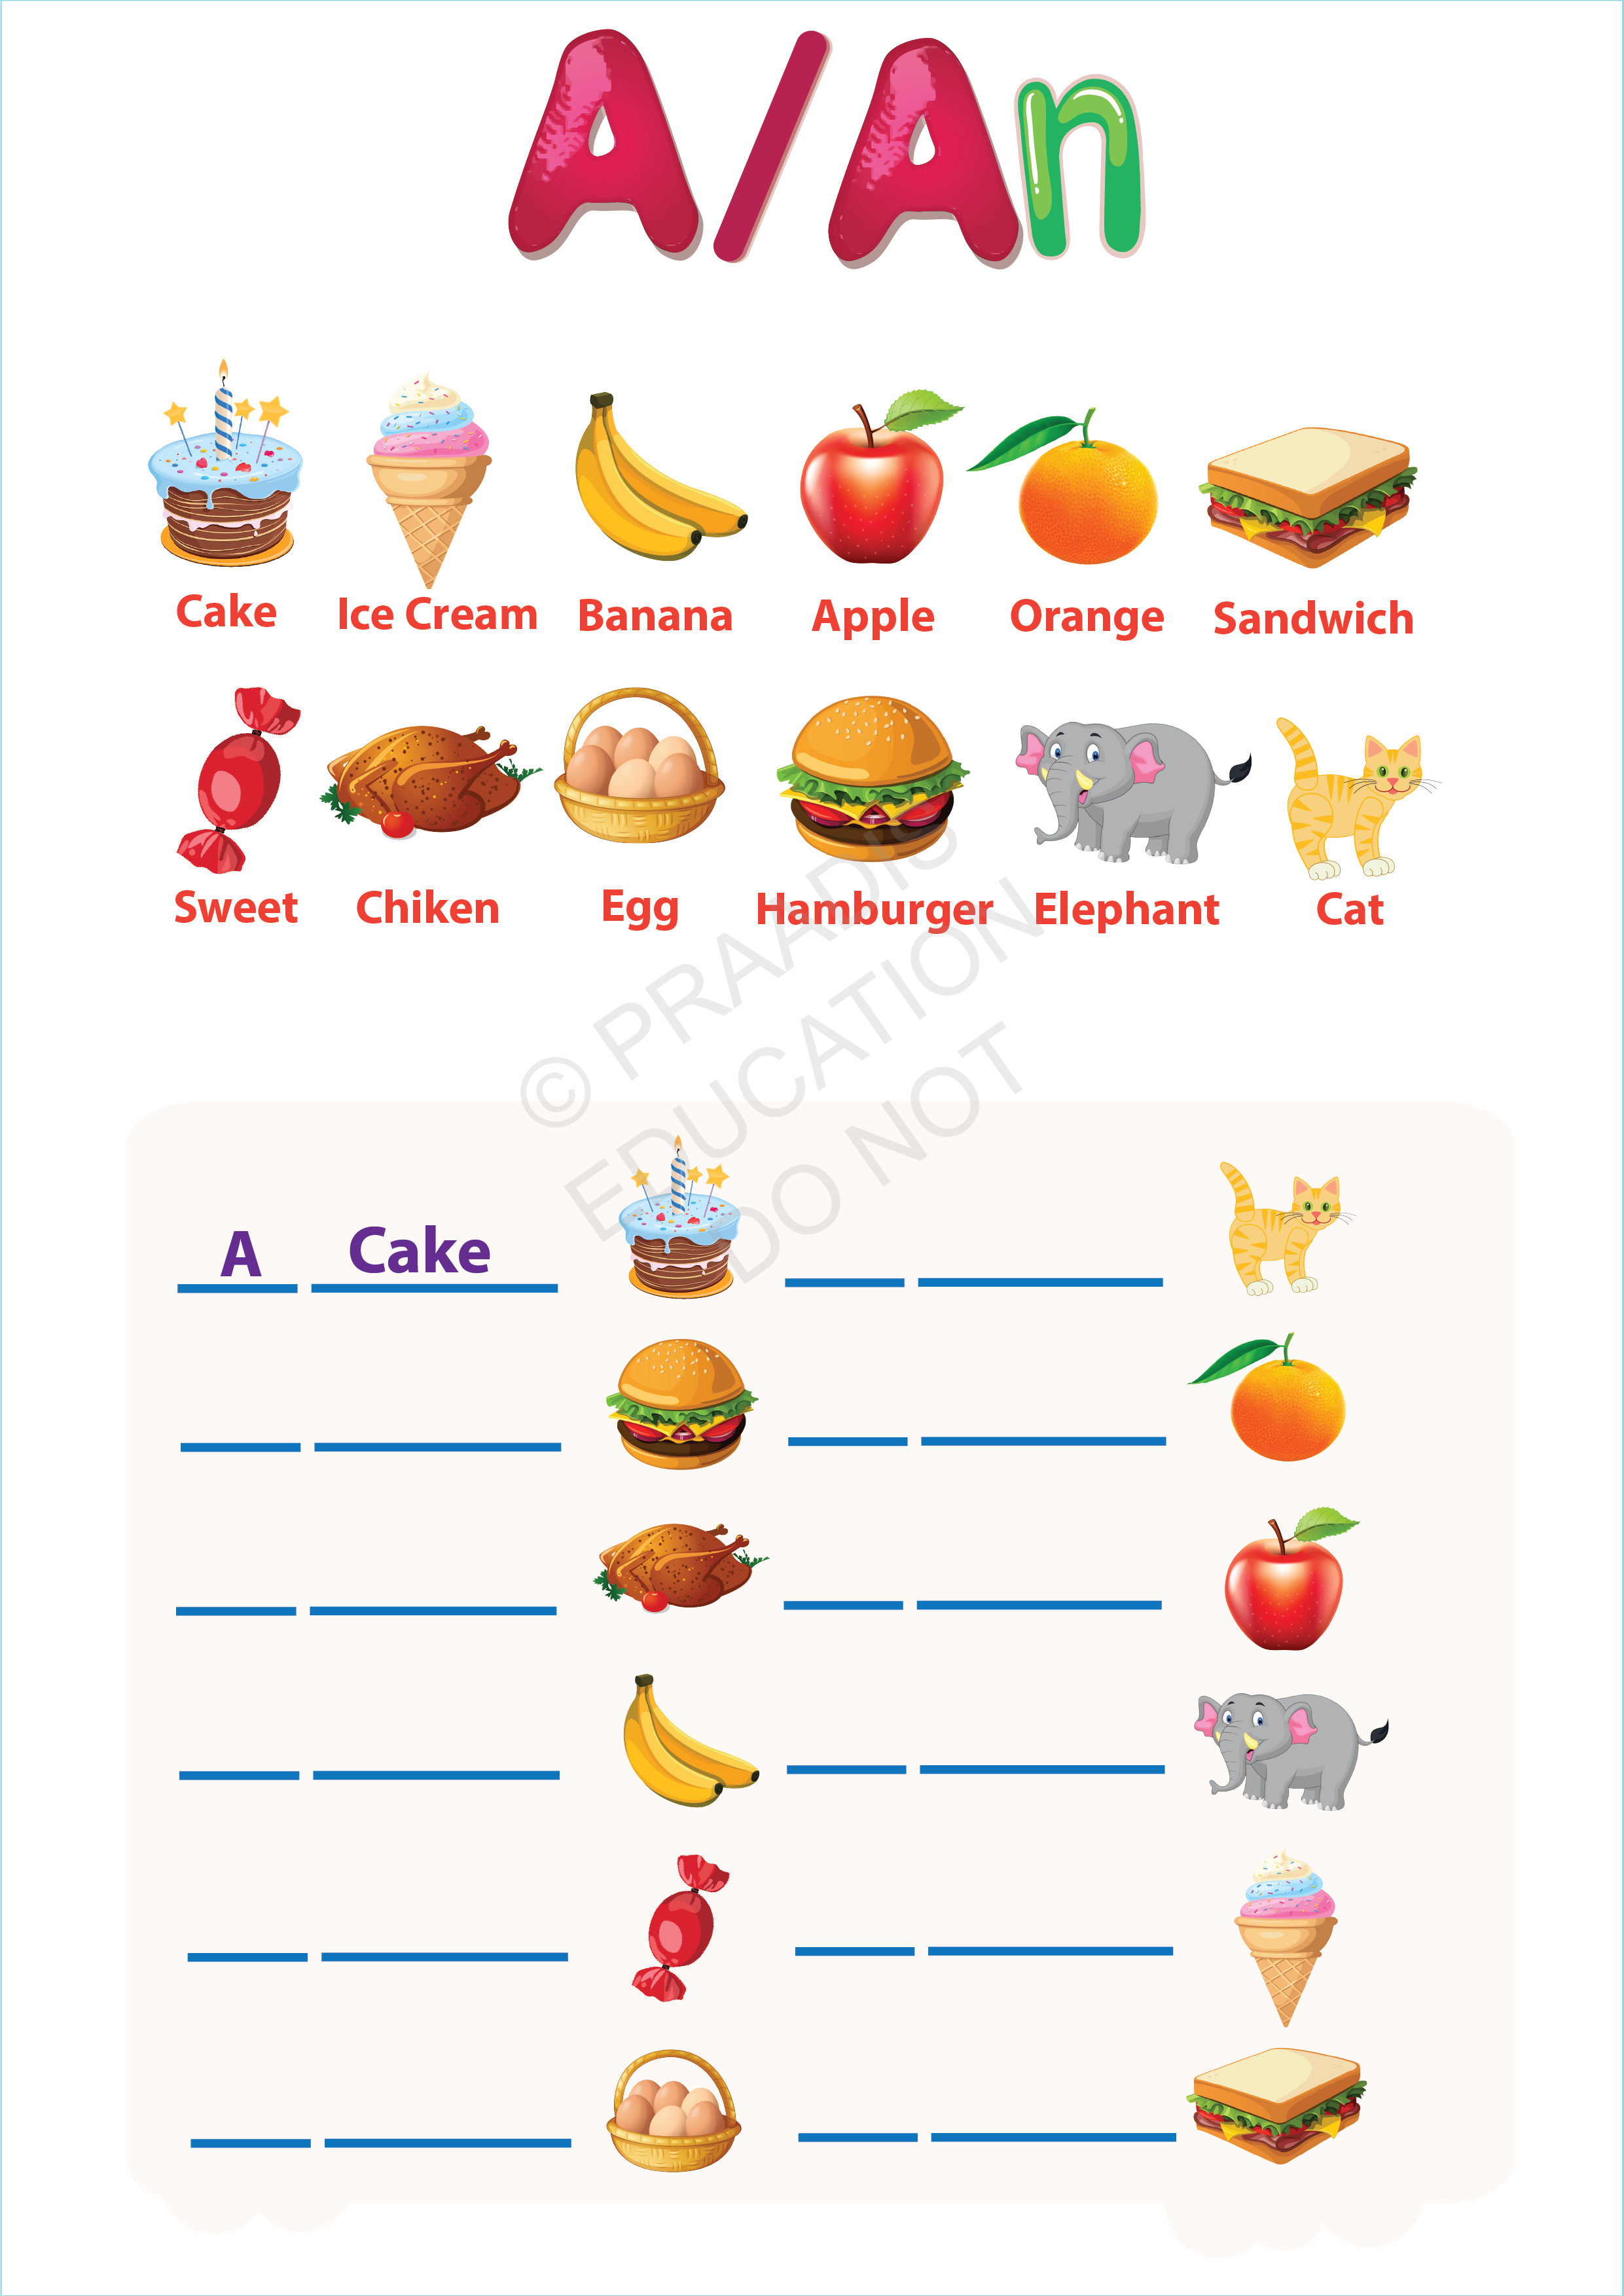 preschool-kindergarten-worksheets-printable-organized-by-subject-k5